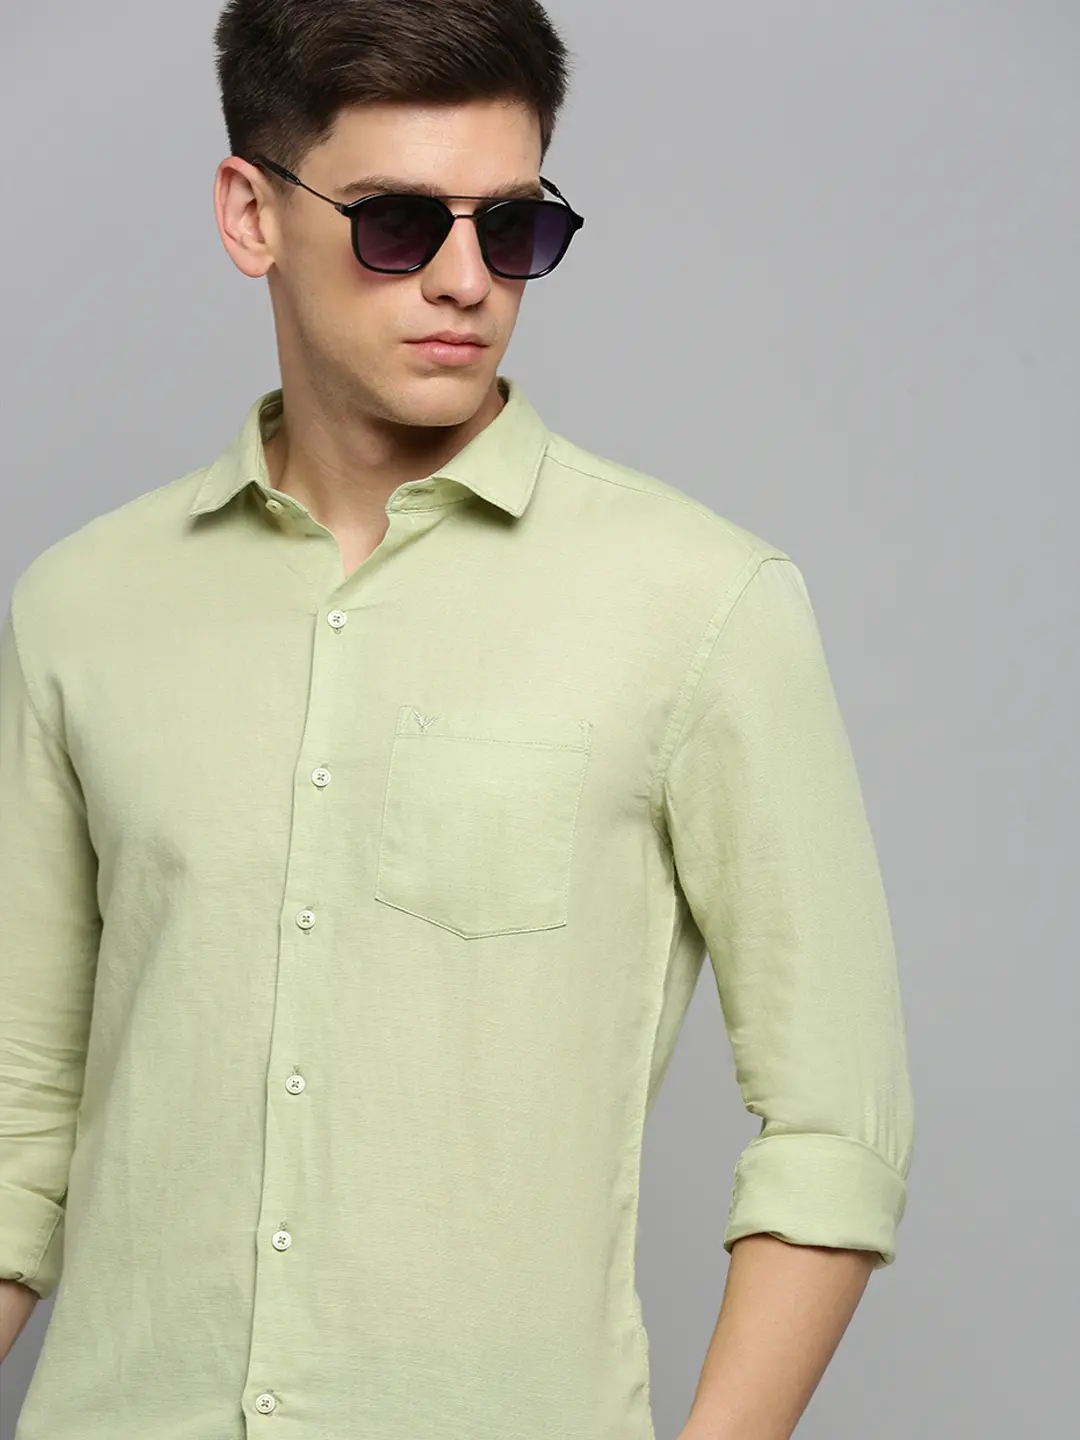 SHOWOFF Men's Spread Collar Solid Green Classic Shirt